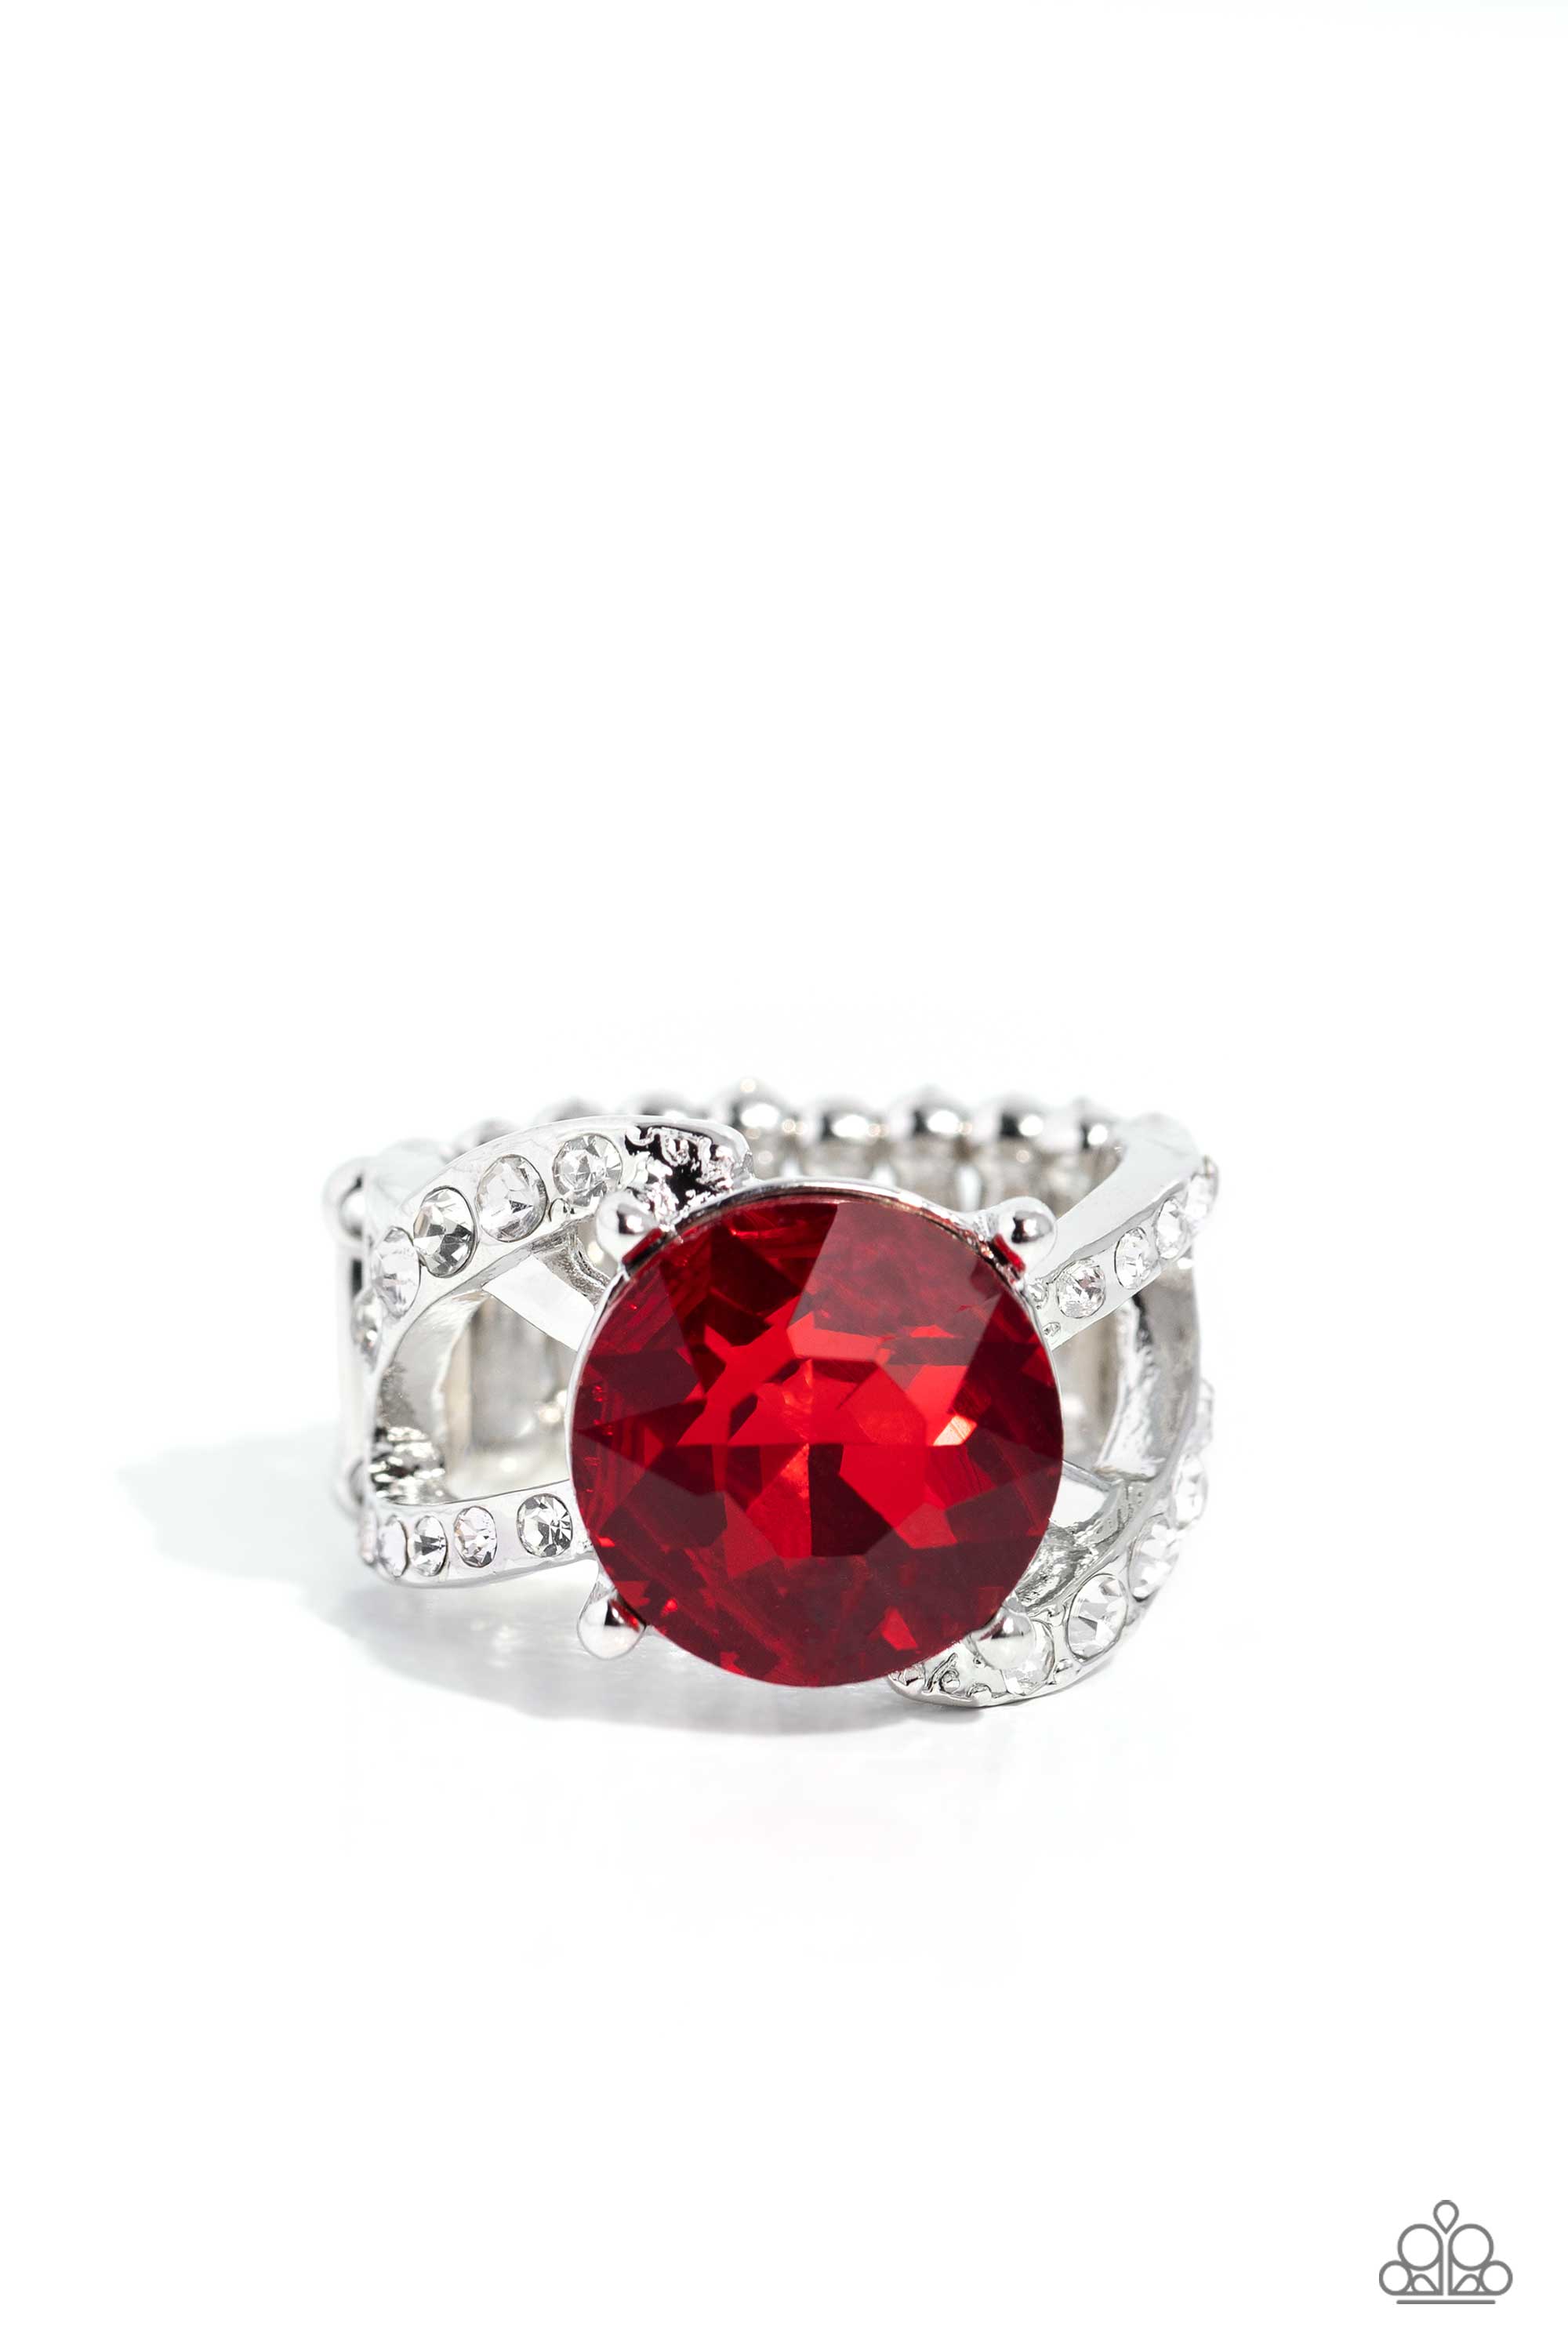 Scintillating Swirl Red Rhinestone Ring - Paparazzi Accessories- lightbox - CarasShop.com - $5 Jewelry by Cara Jewels